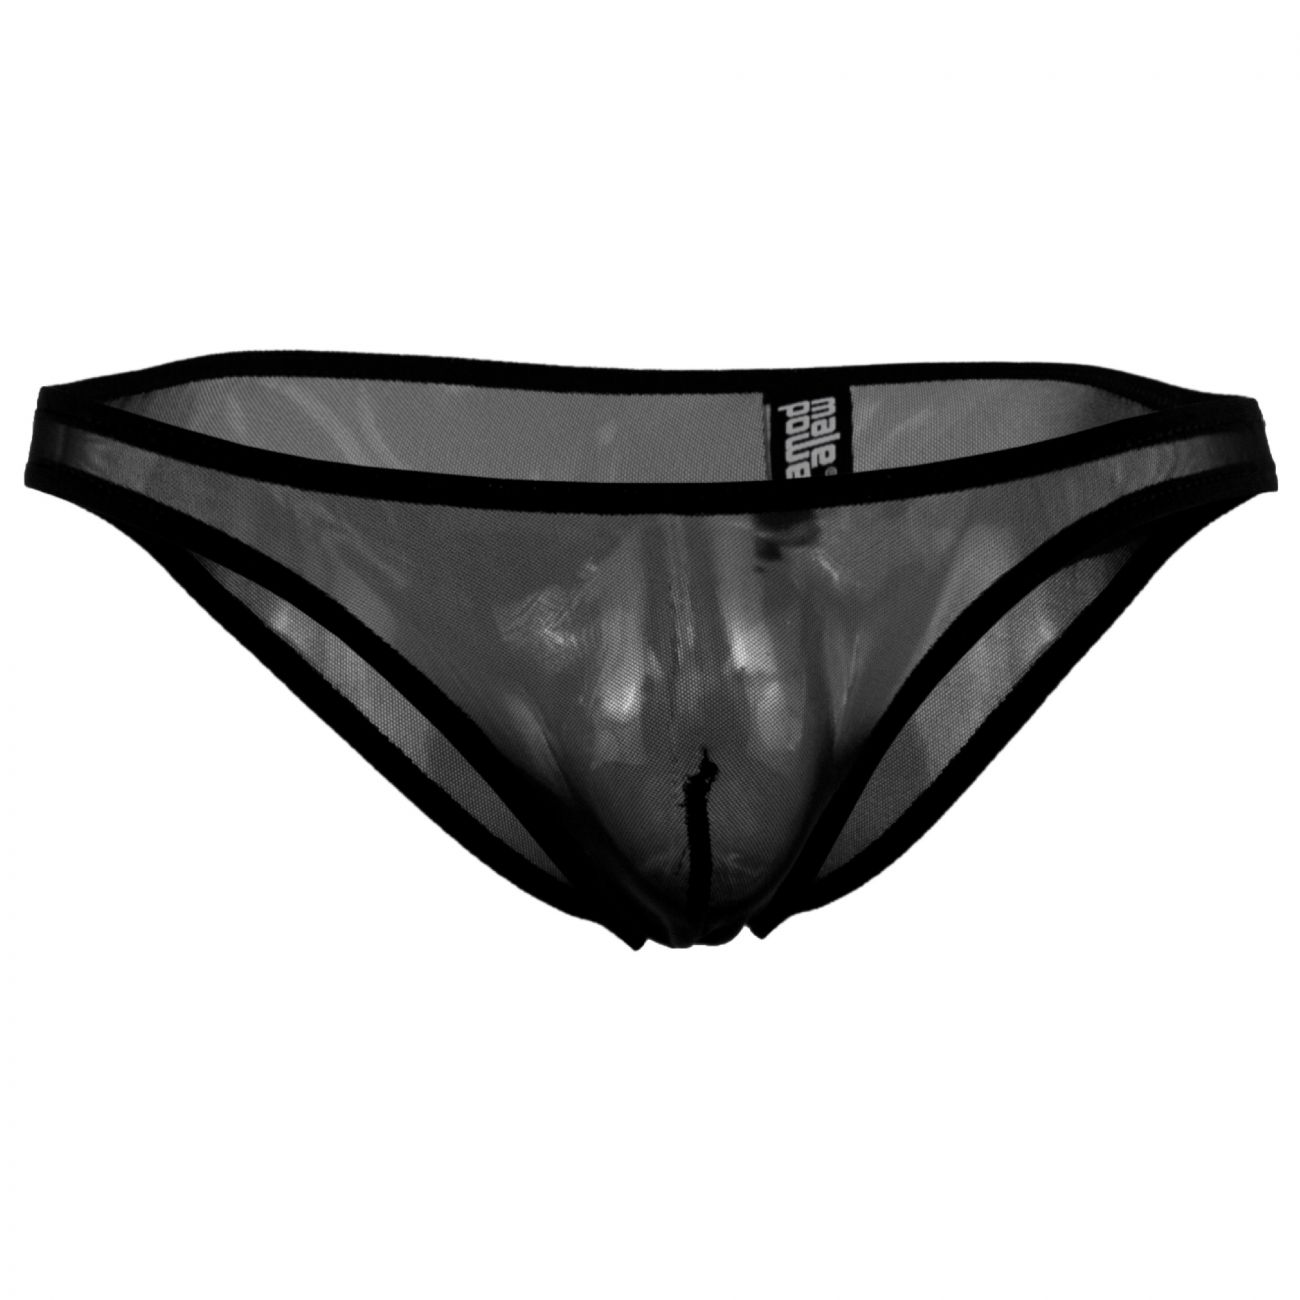 Mens Underwear: Male Power PAK881 Euro Male Mesh Brazilian Pouch Bikini ...